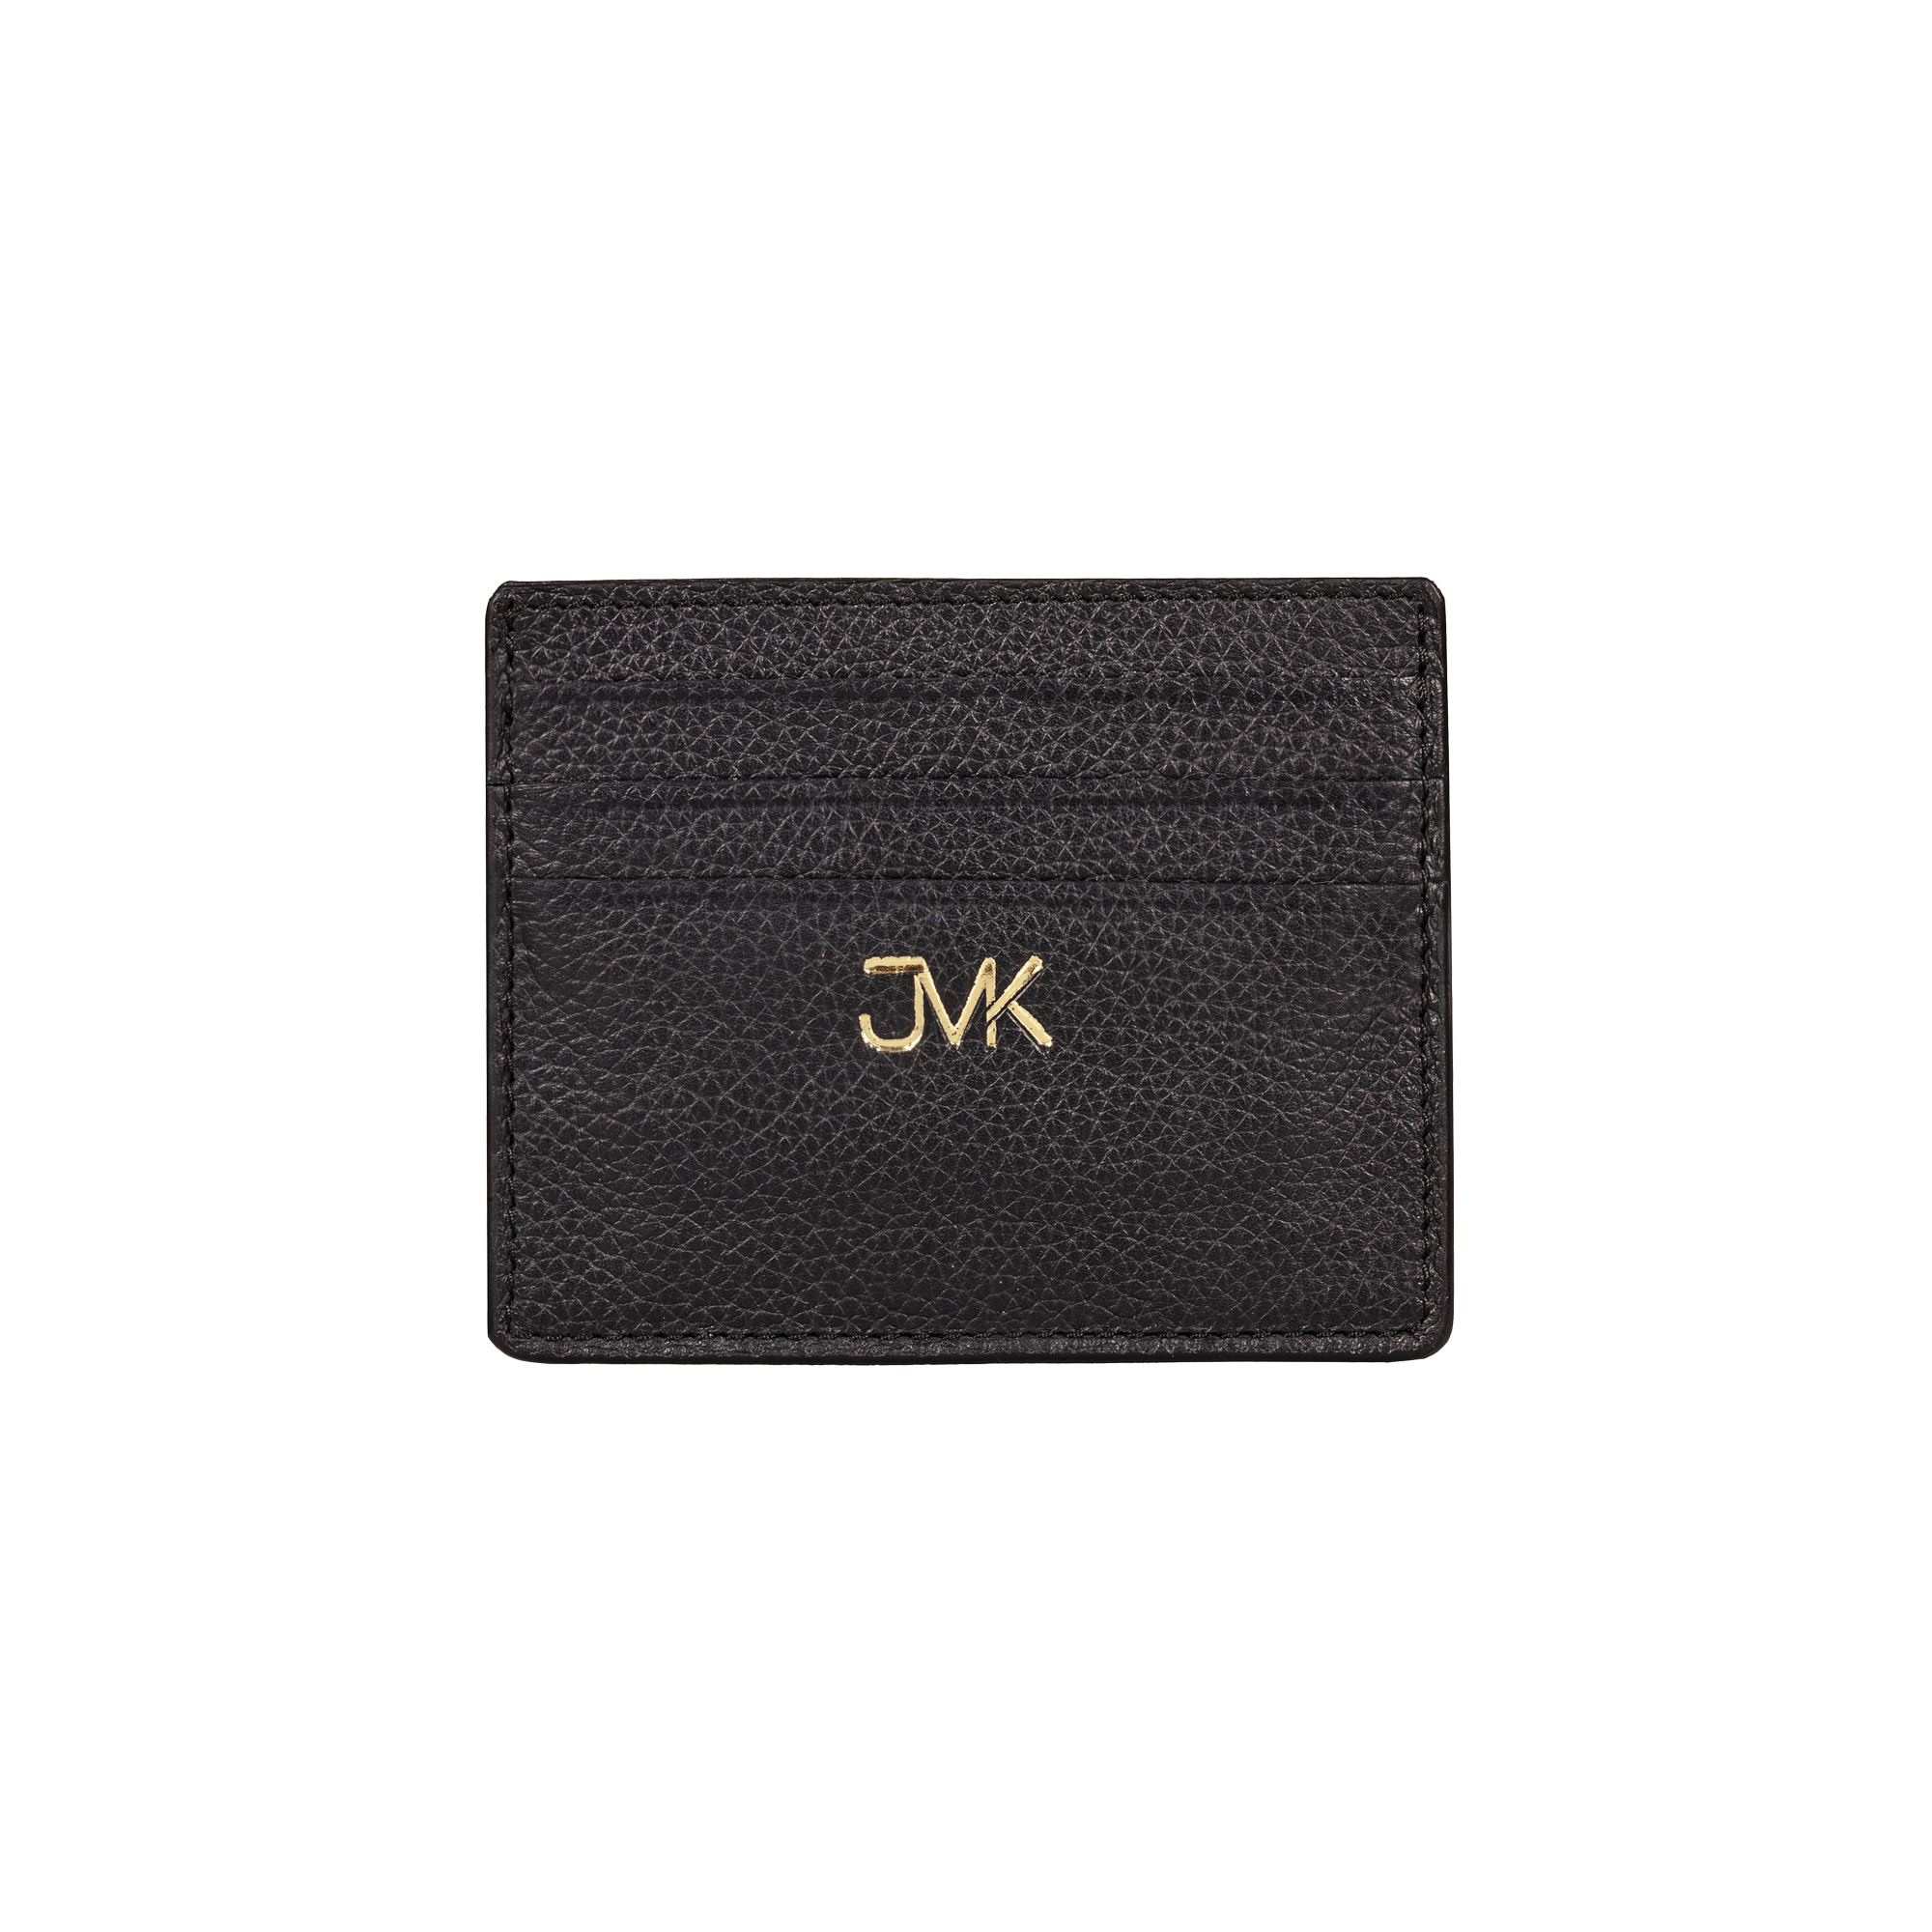 Card Holder - 6 Slots, Grain Leather Black/Black, MAISON JMK-VONMEL Luxe Gifts